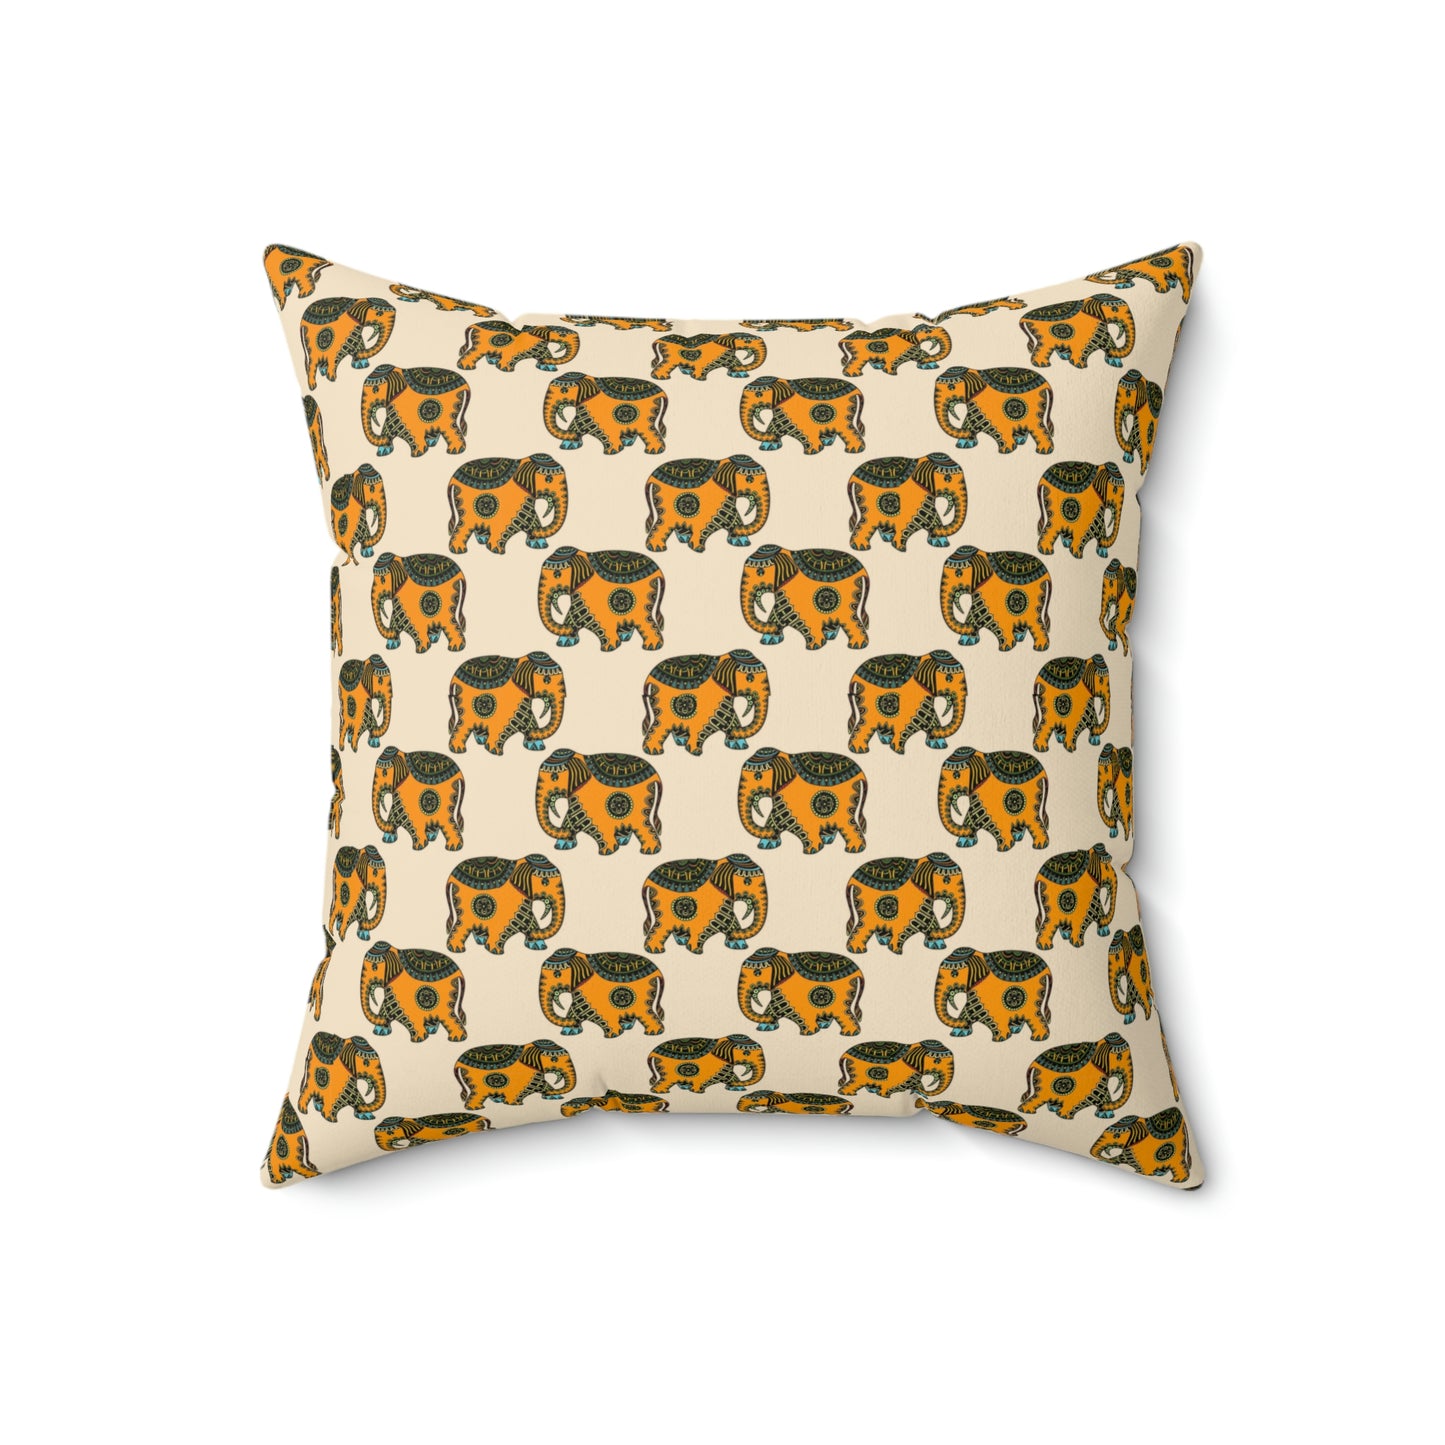 Bohemian Elephant pillow cover